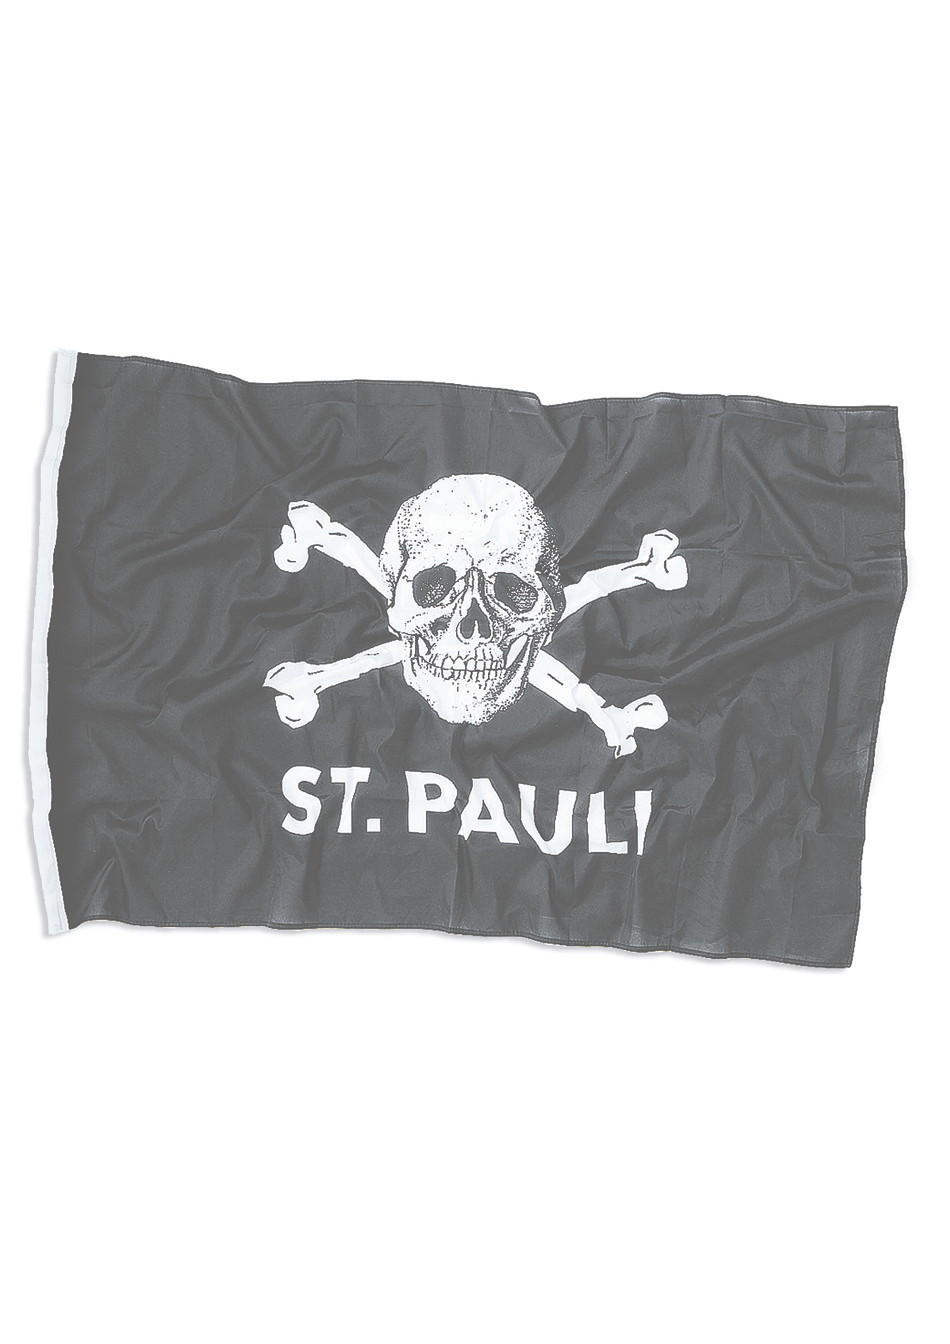 Skull and crossbones flag